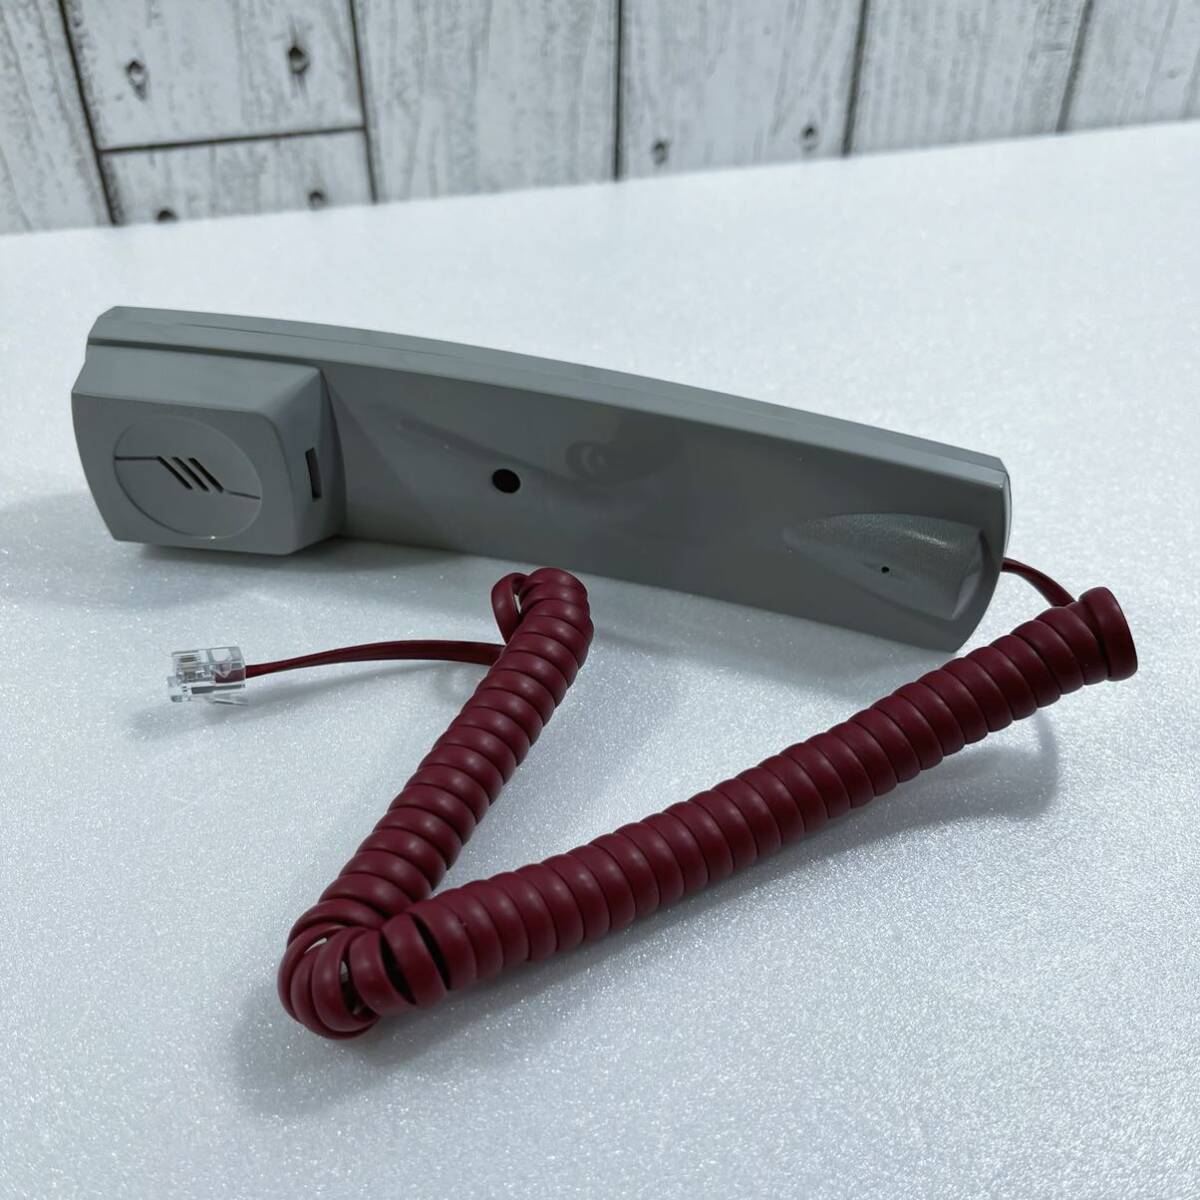 N・INC 電話機 CALLER ID PHONE 家庭用 便利 安心 軽量 型式KX-T071CID レトロ (赤) 美品　送料無料_画像4